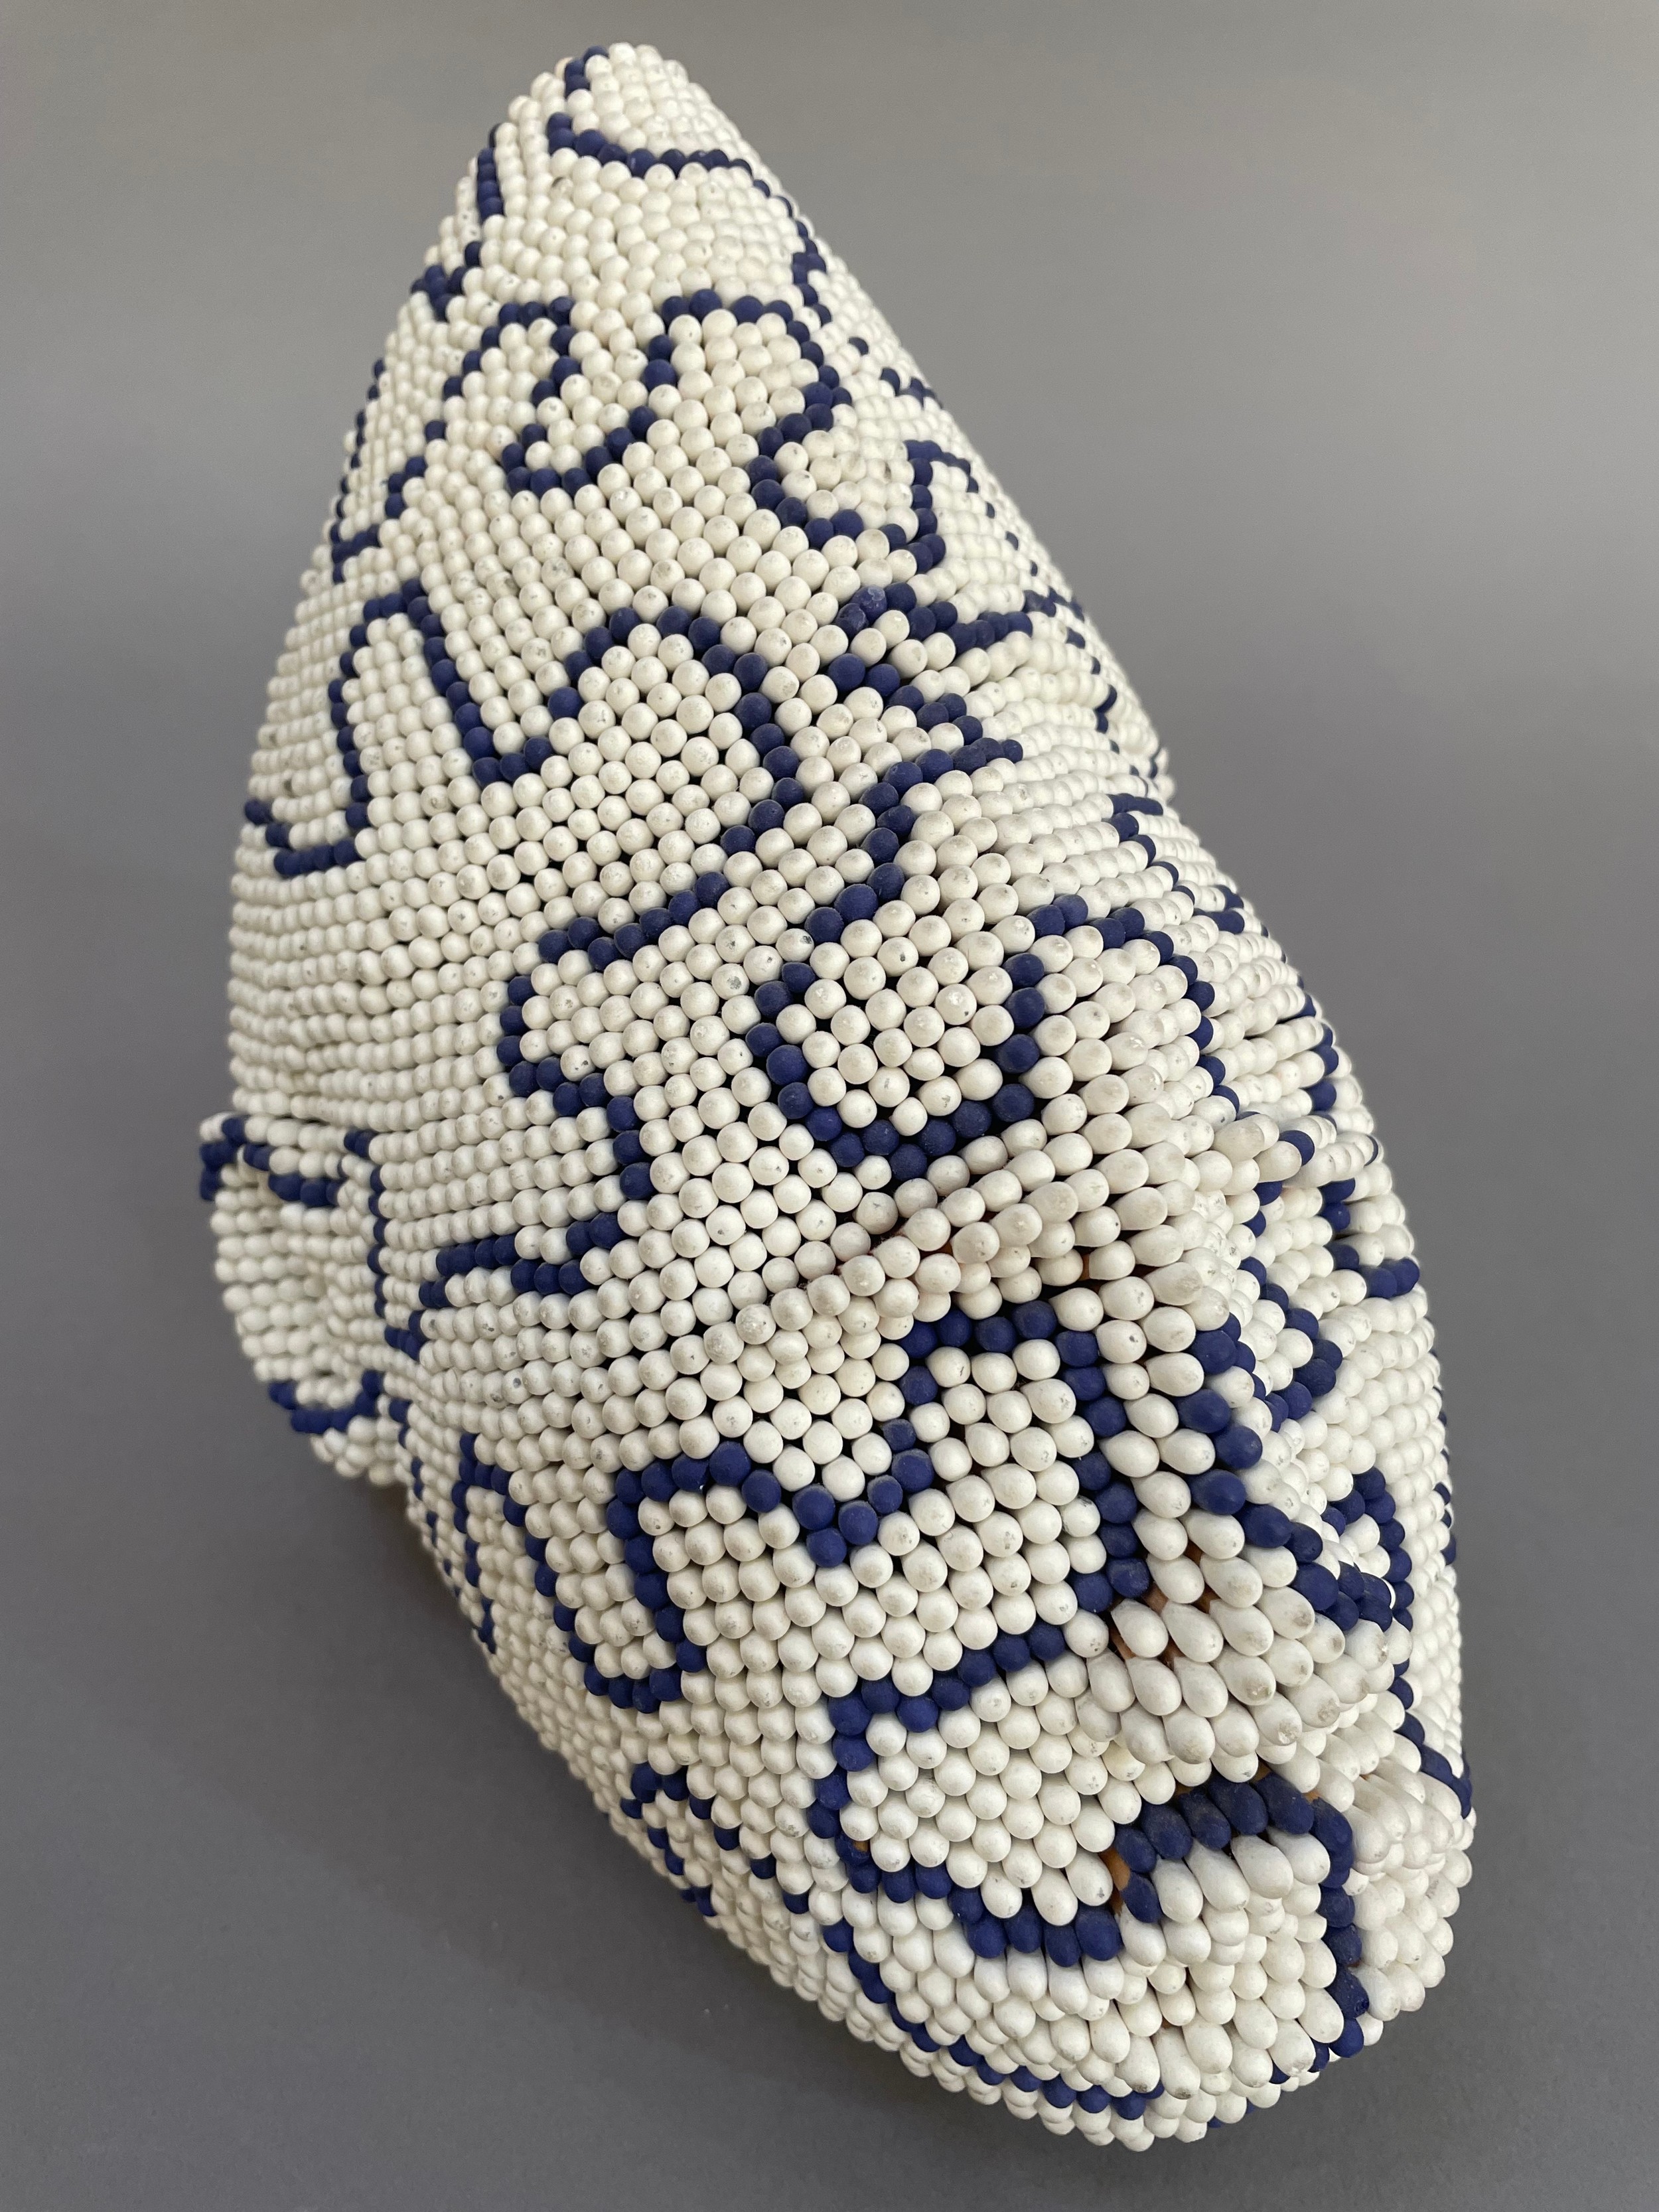 ARR David Mach (b1956), African Matchhead (c), 1994, sculpture, white and blue match sticks and